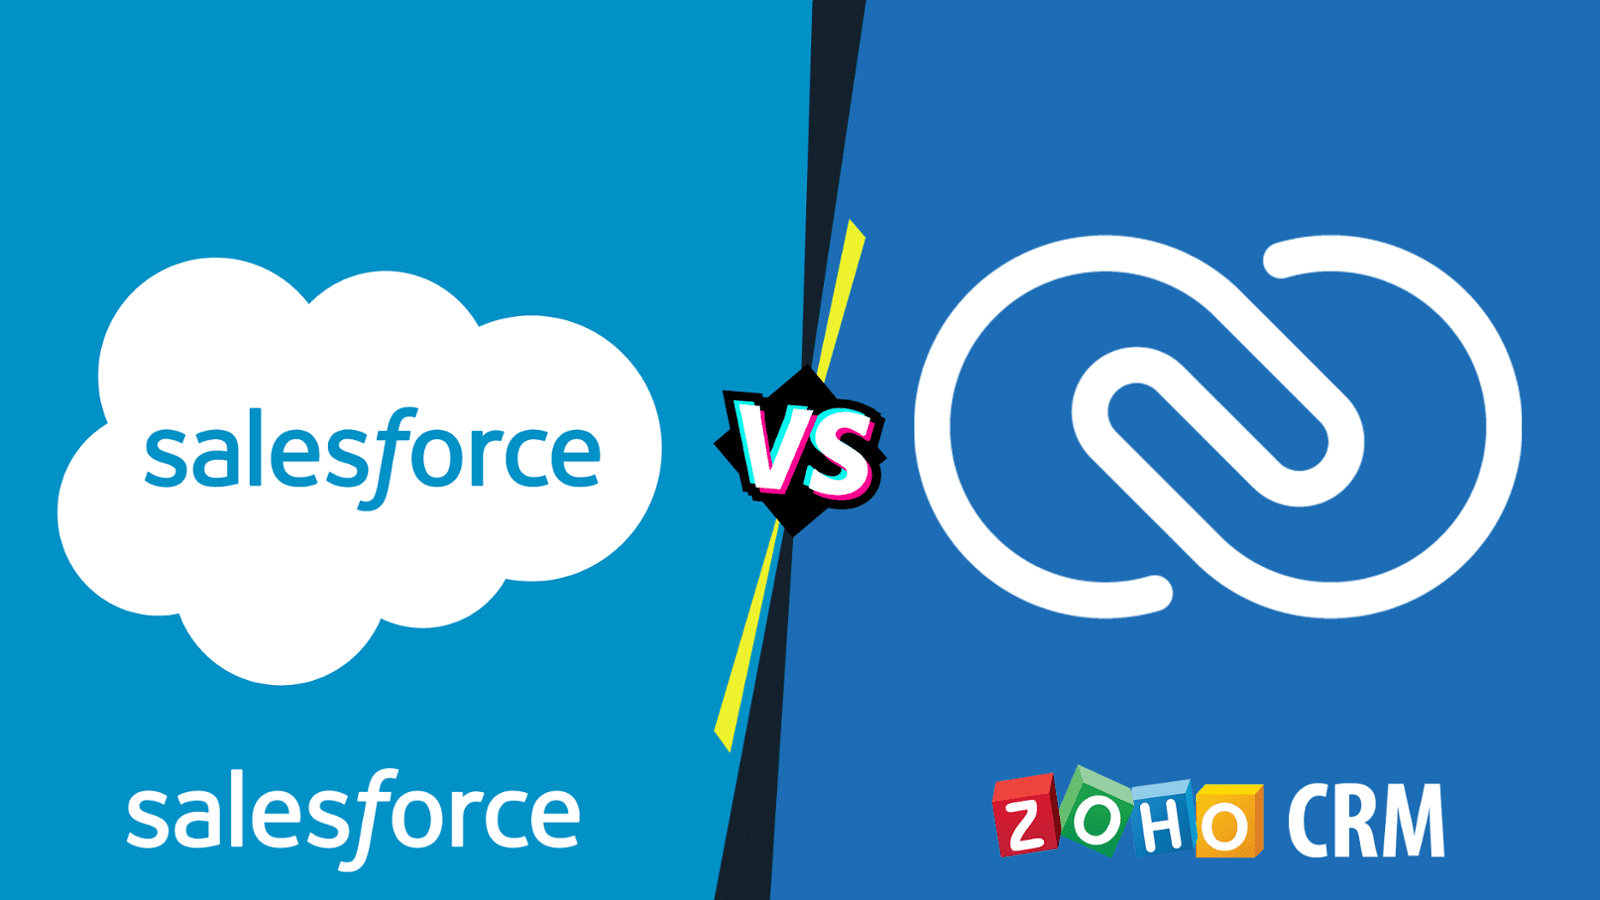 Zoho CRM vs Salesforce